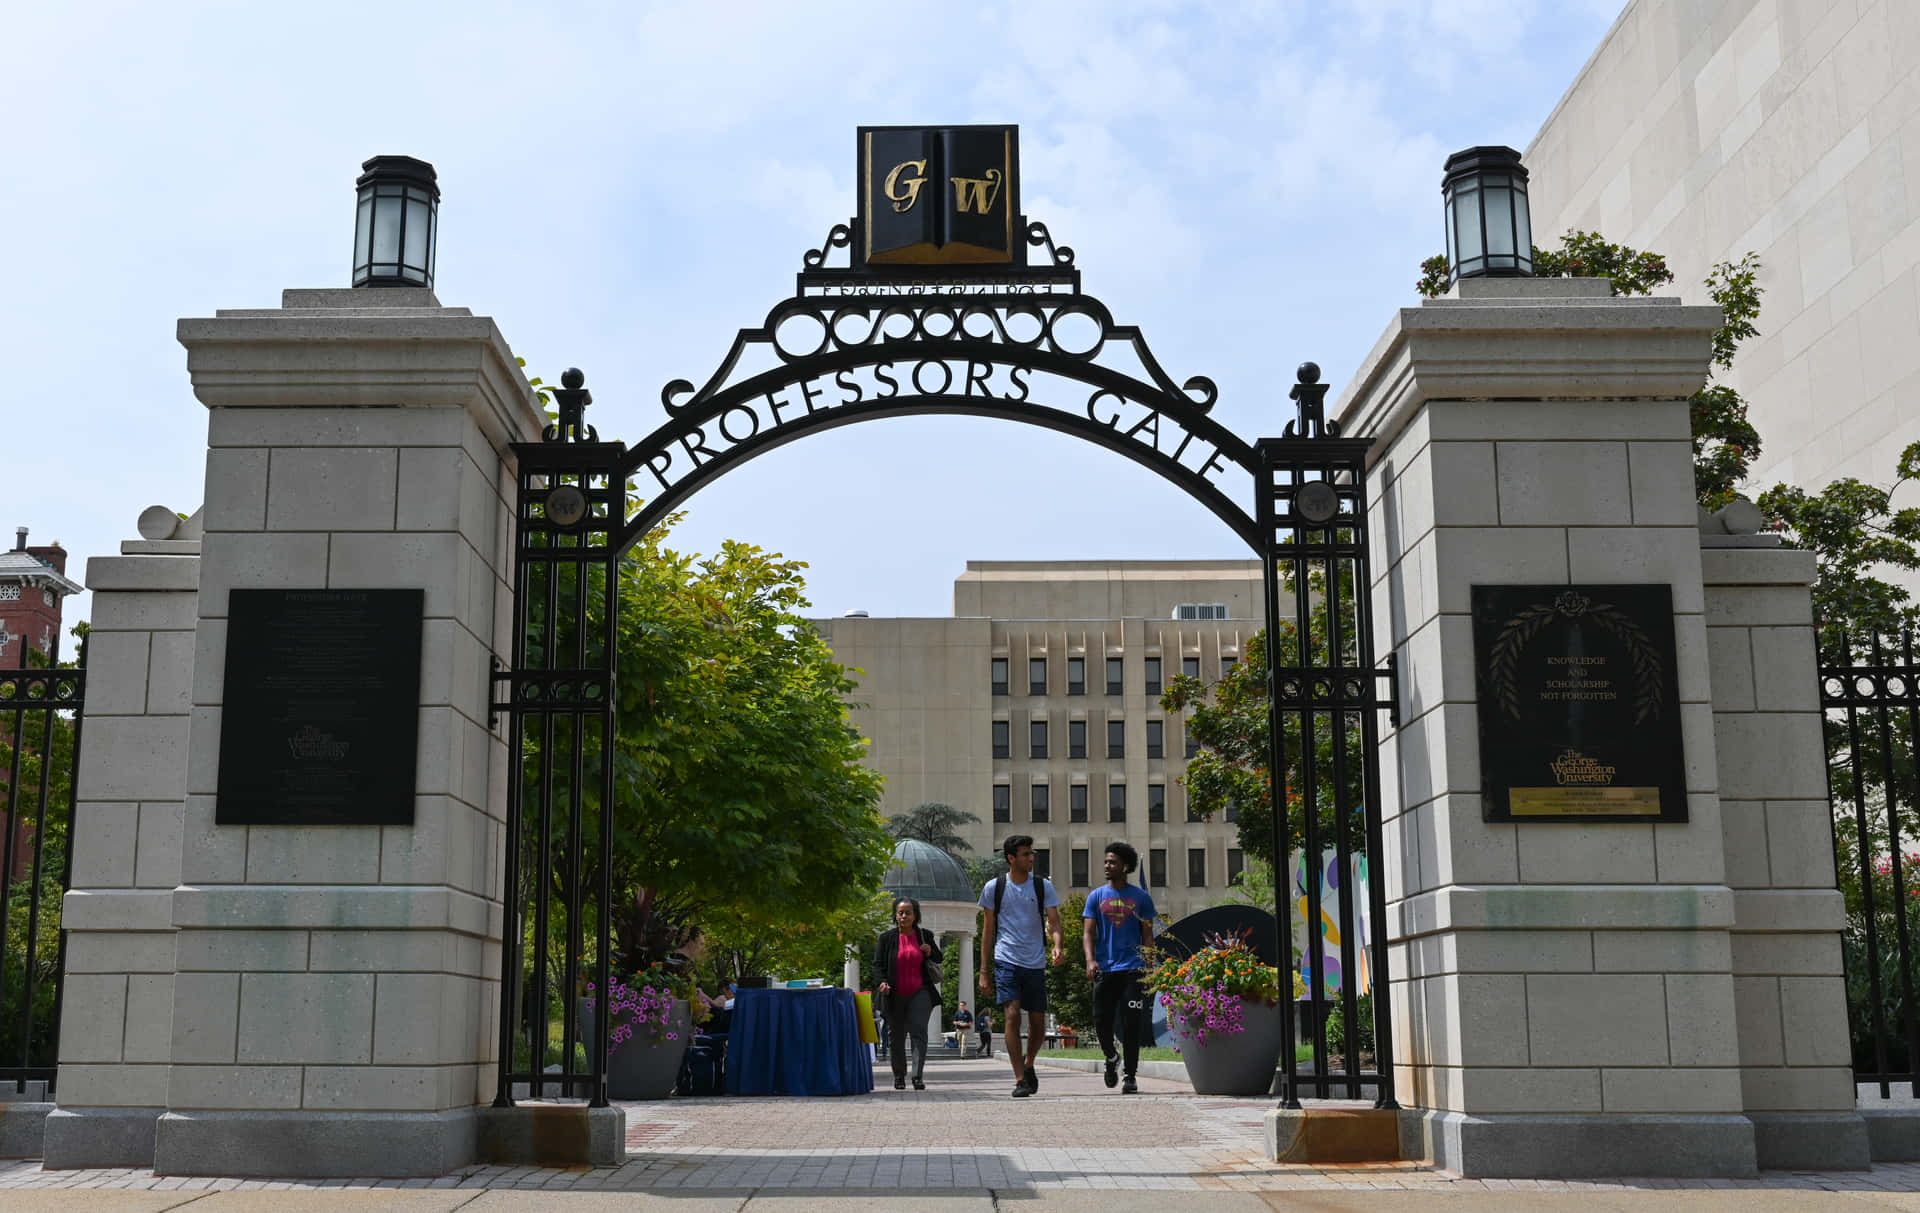 George Washington University Professor's Gate Picture